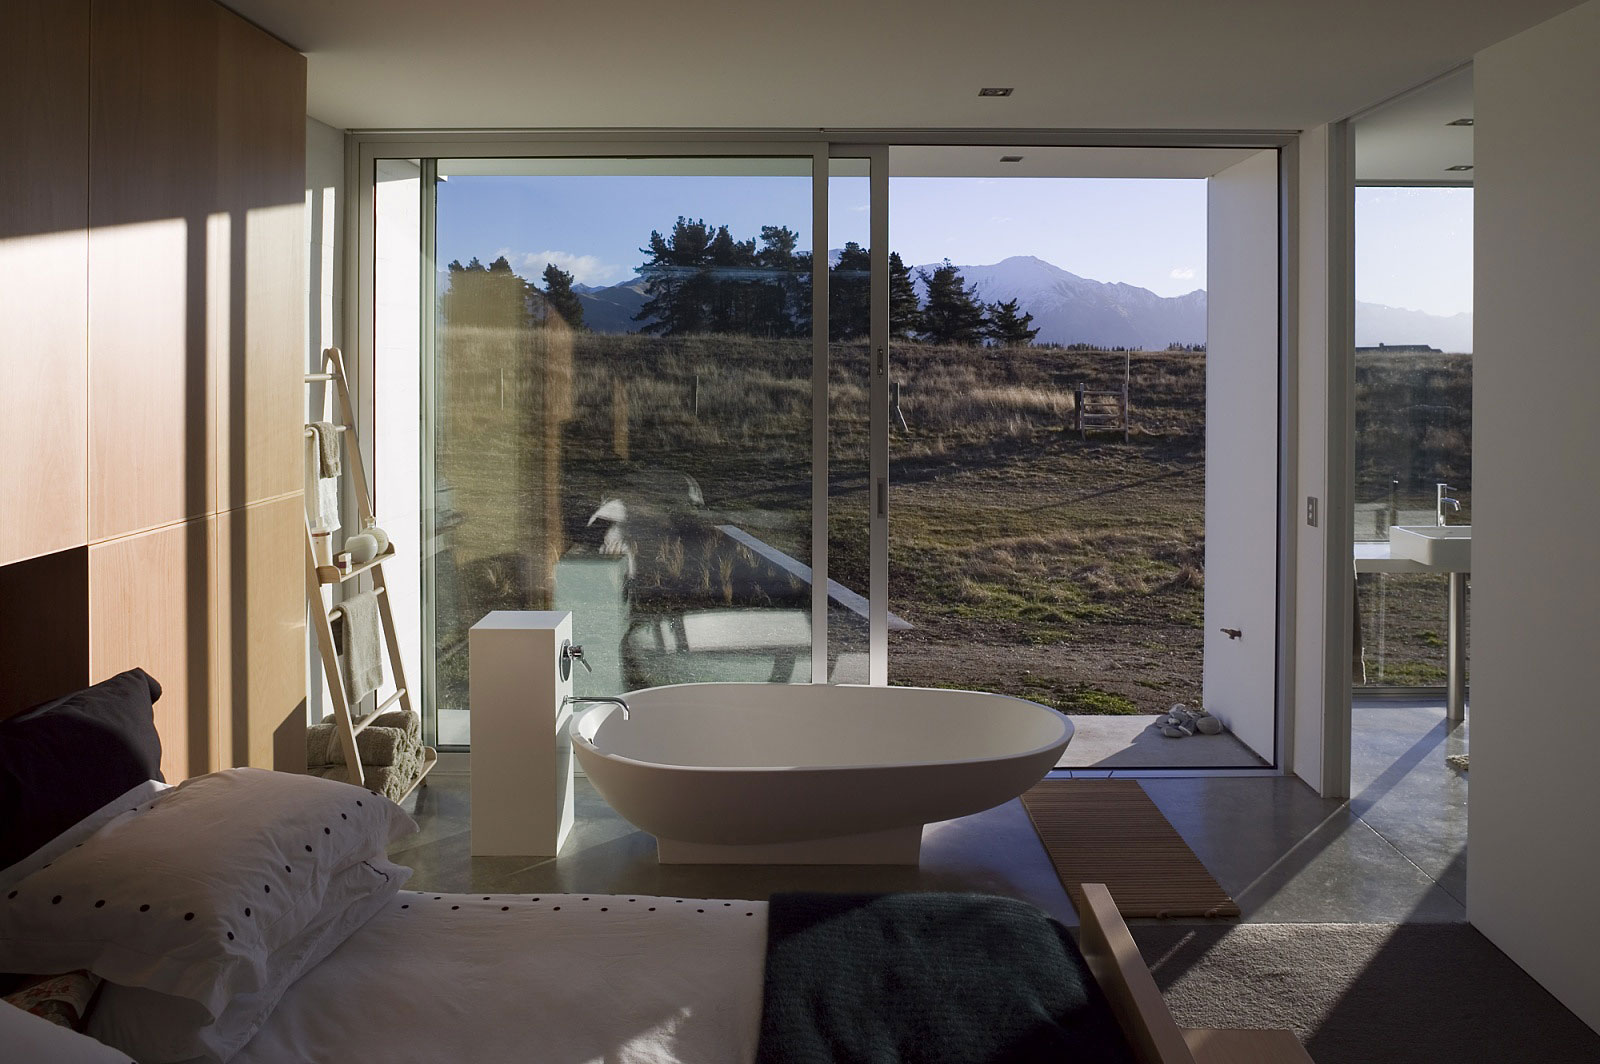 New Home Interior Design Ideas Nz with Simple Decor